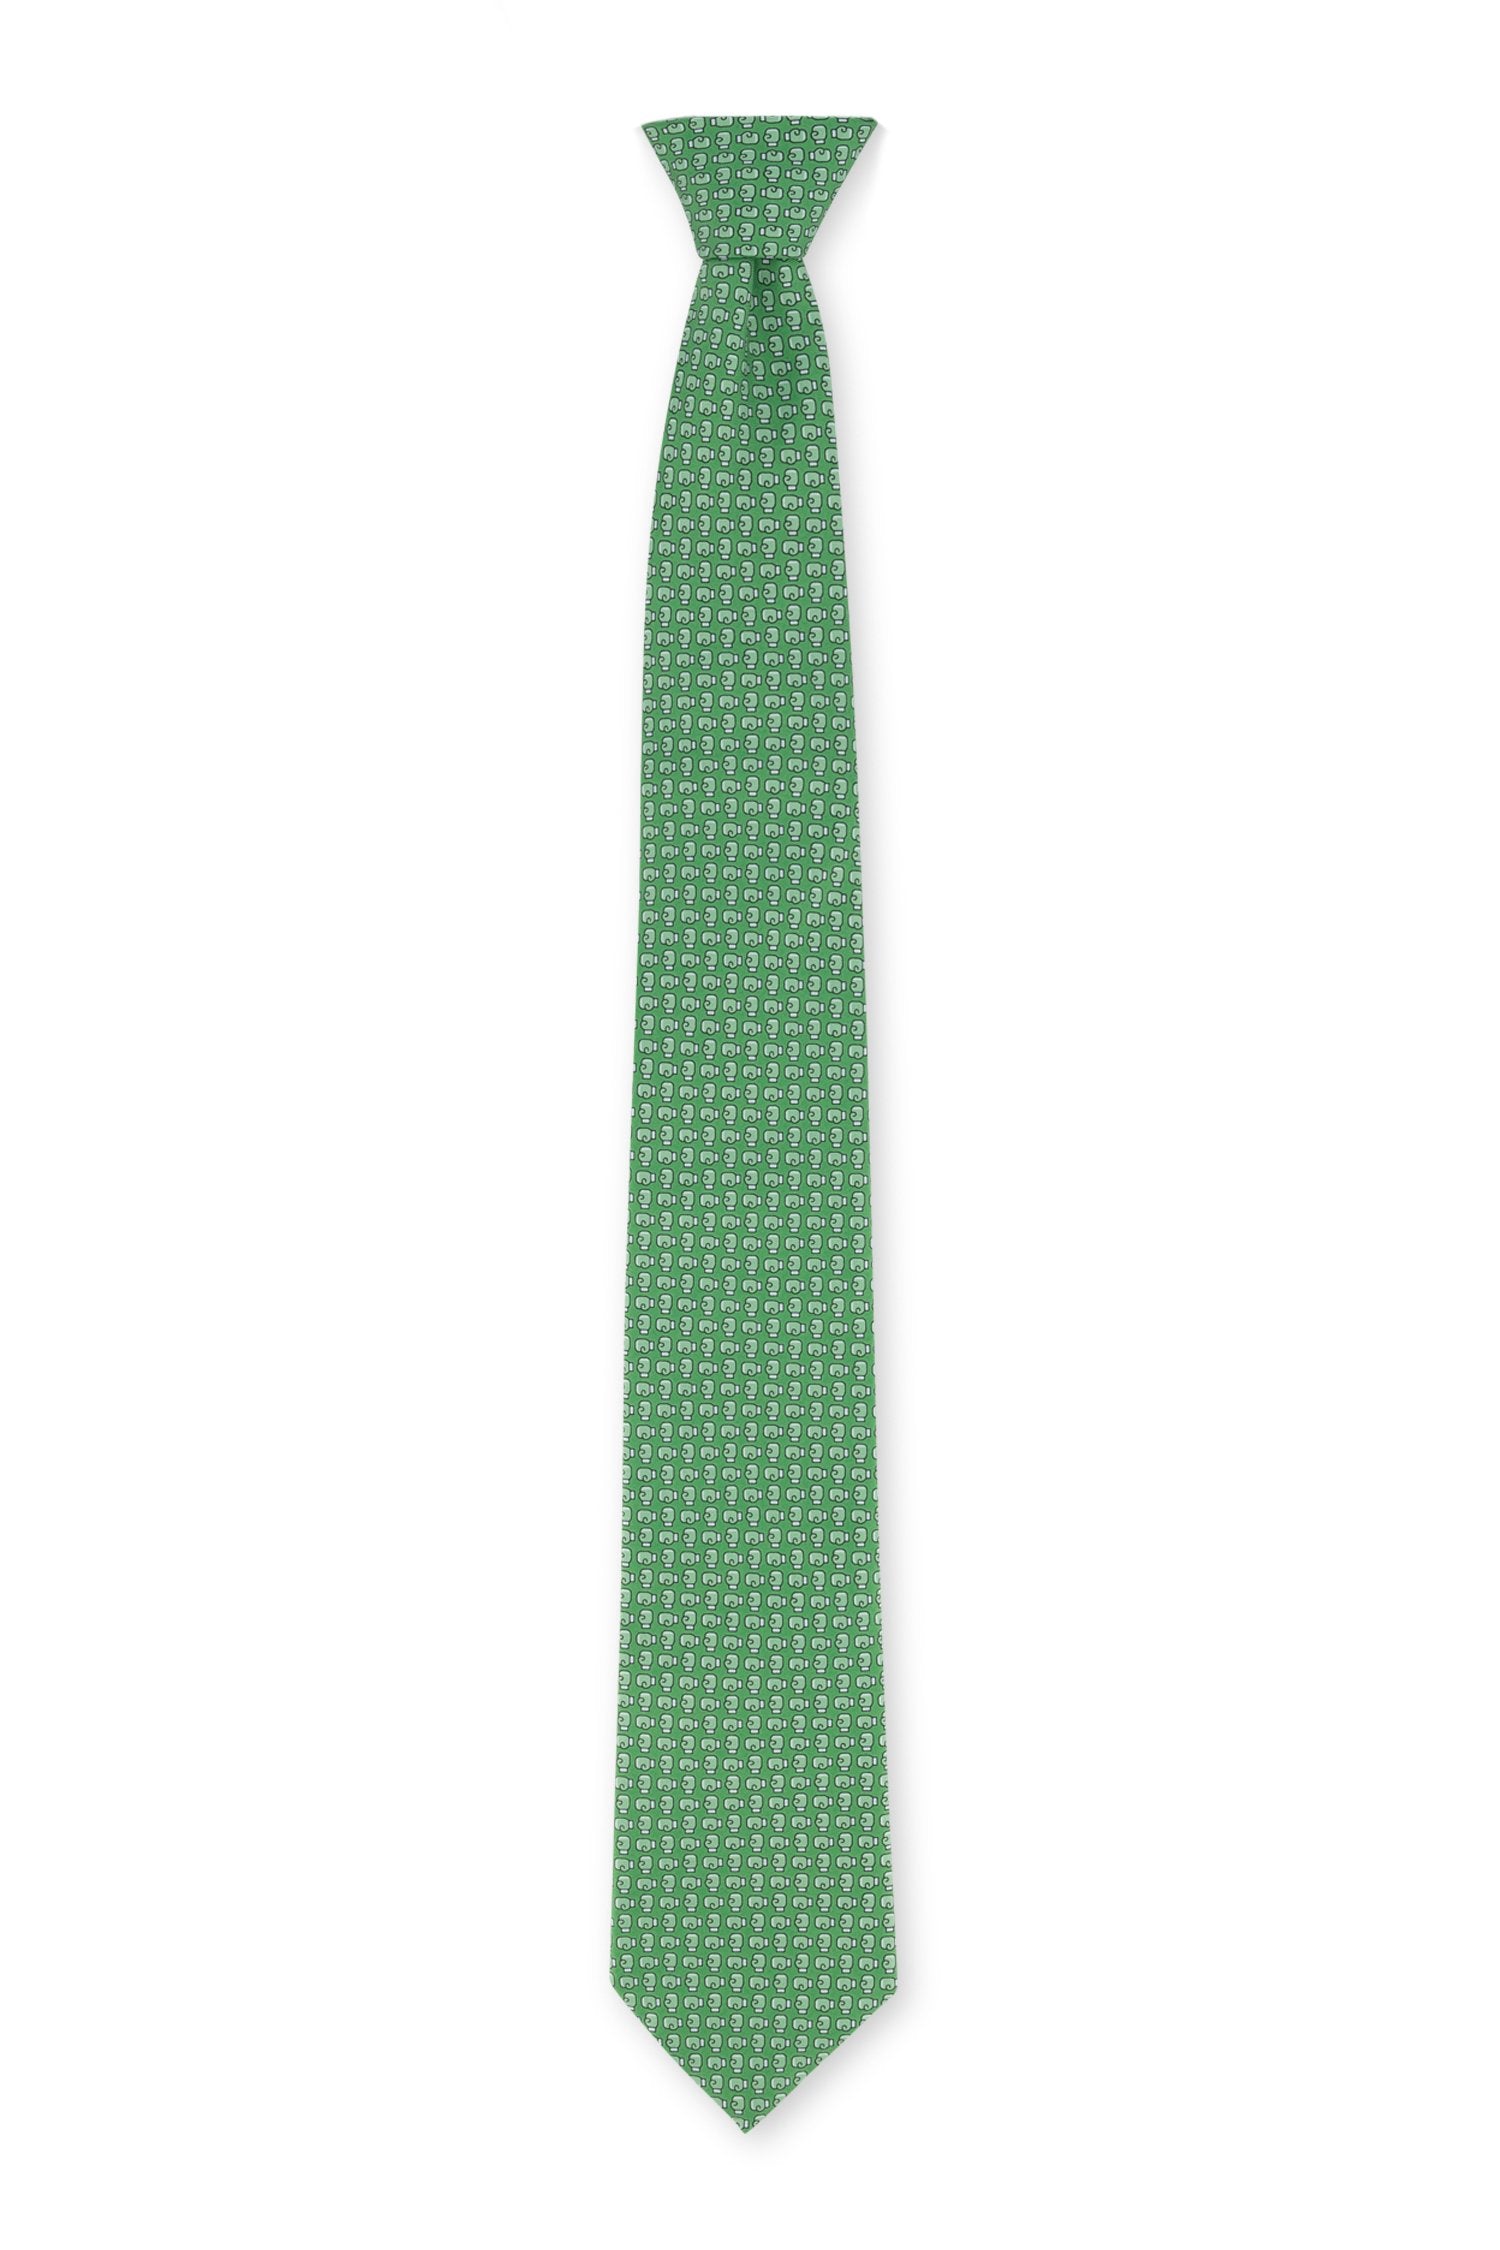 Pineda Covalin Neckties Green Pineda Covalin Boxing Gloves Necktie